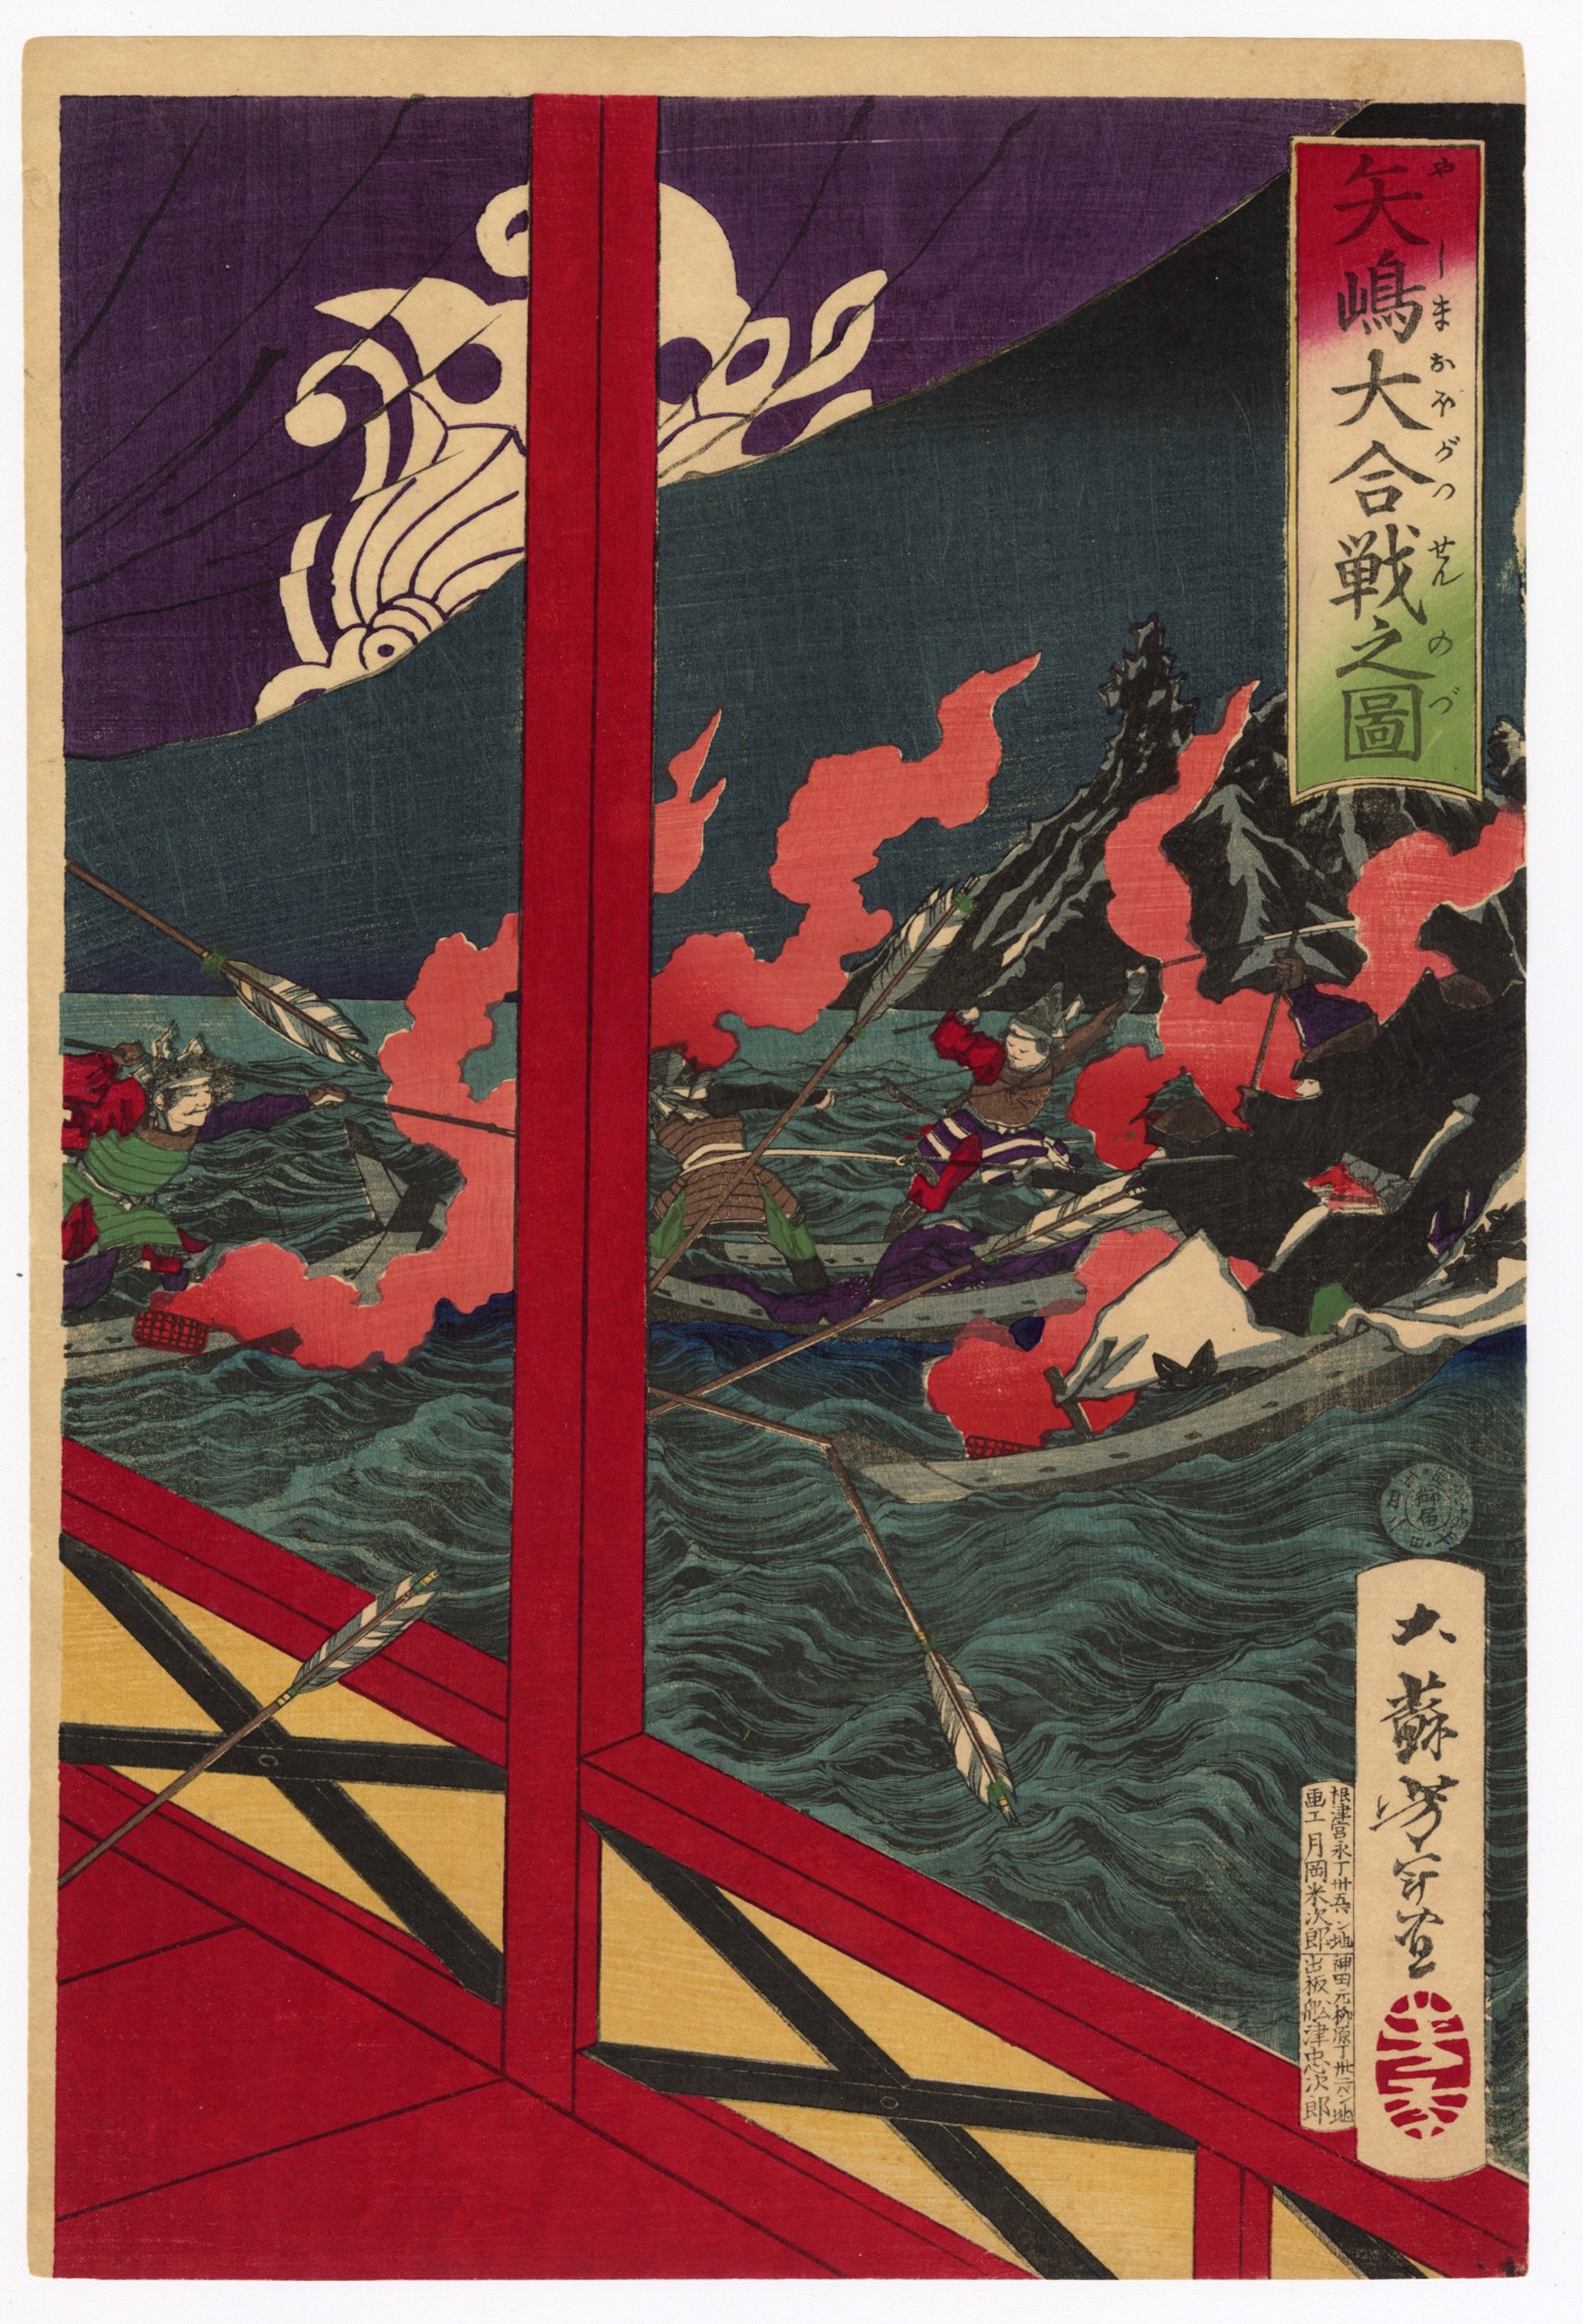 The Great Battle of Yashima by Yoshitoshi